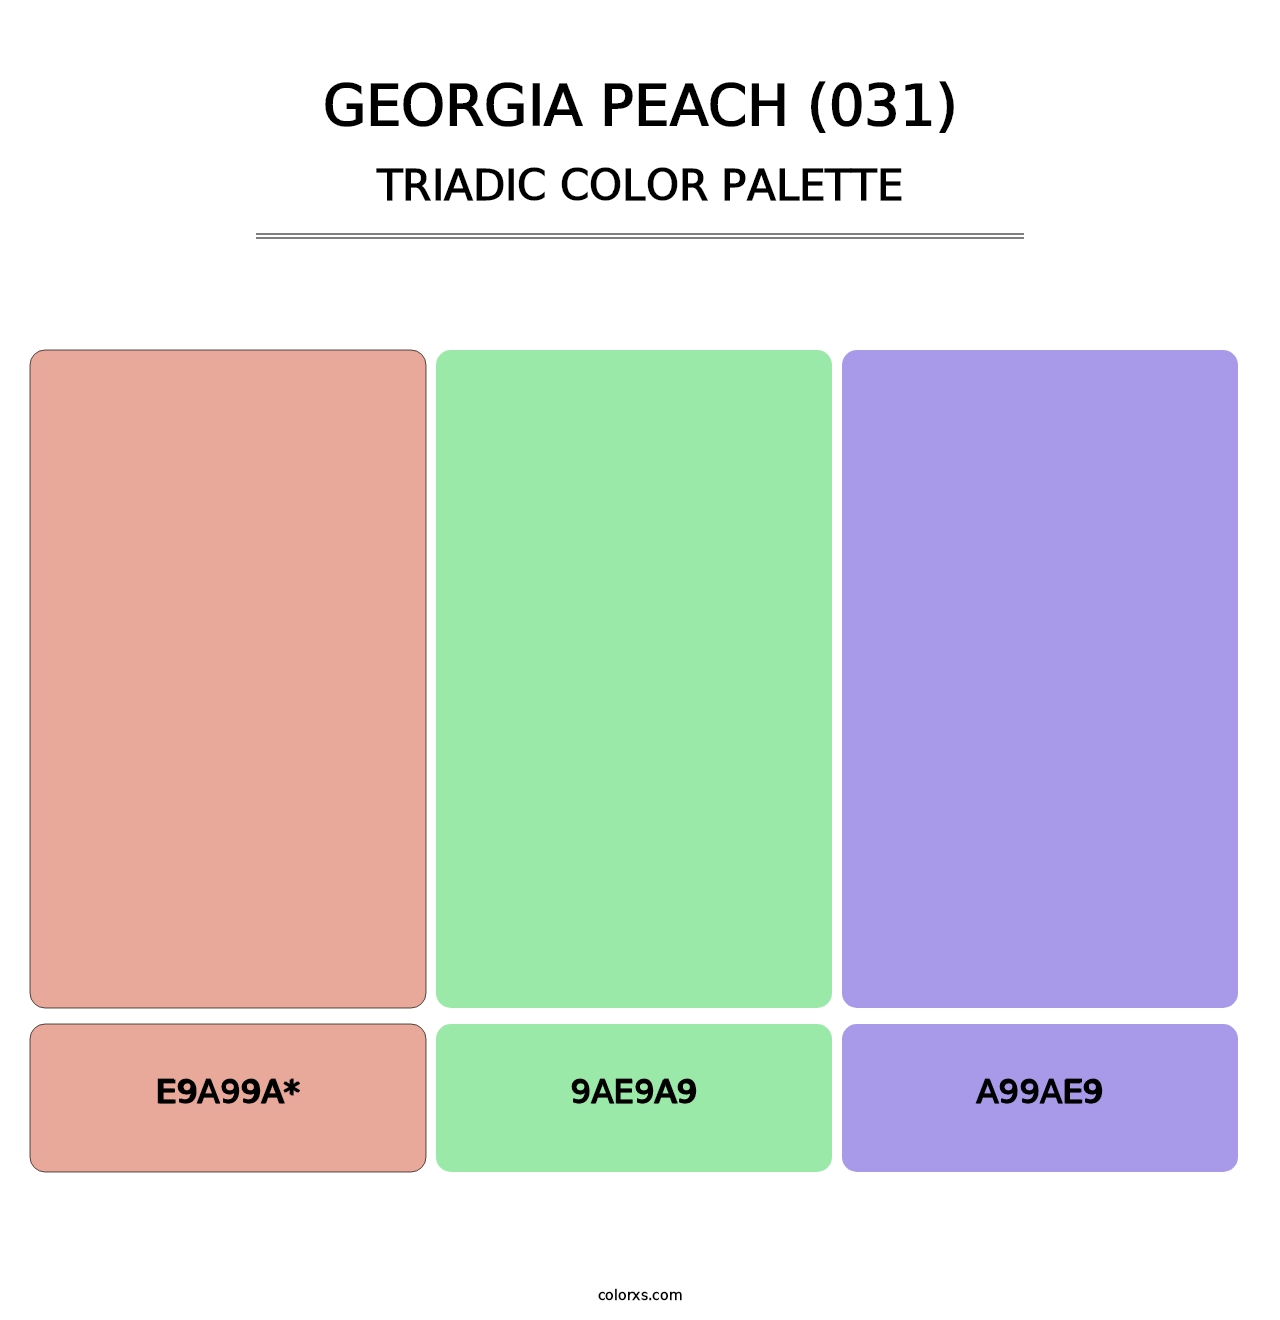 Georgia Peach (031) - Triadic Color Palette